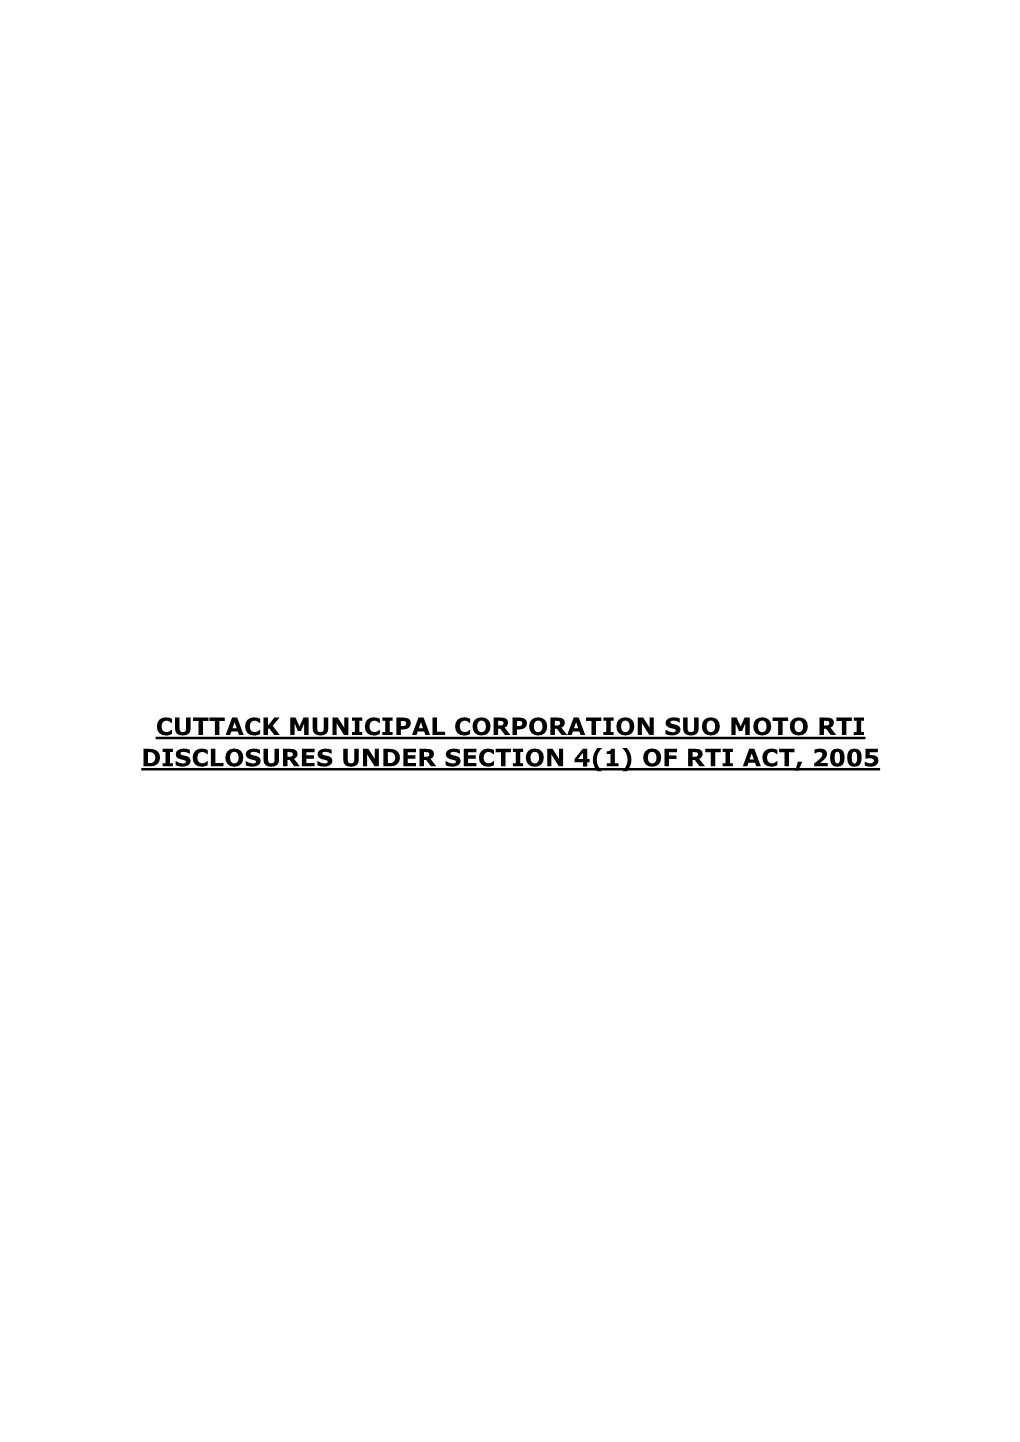 Cuttack Municipal Corporation Suo Moto Rti Disclosures Under Section 4(1) of Rti Act, 2005